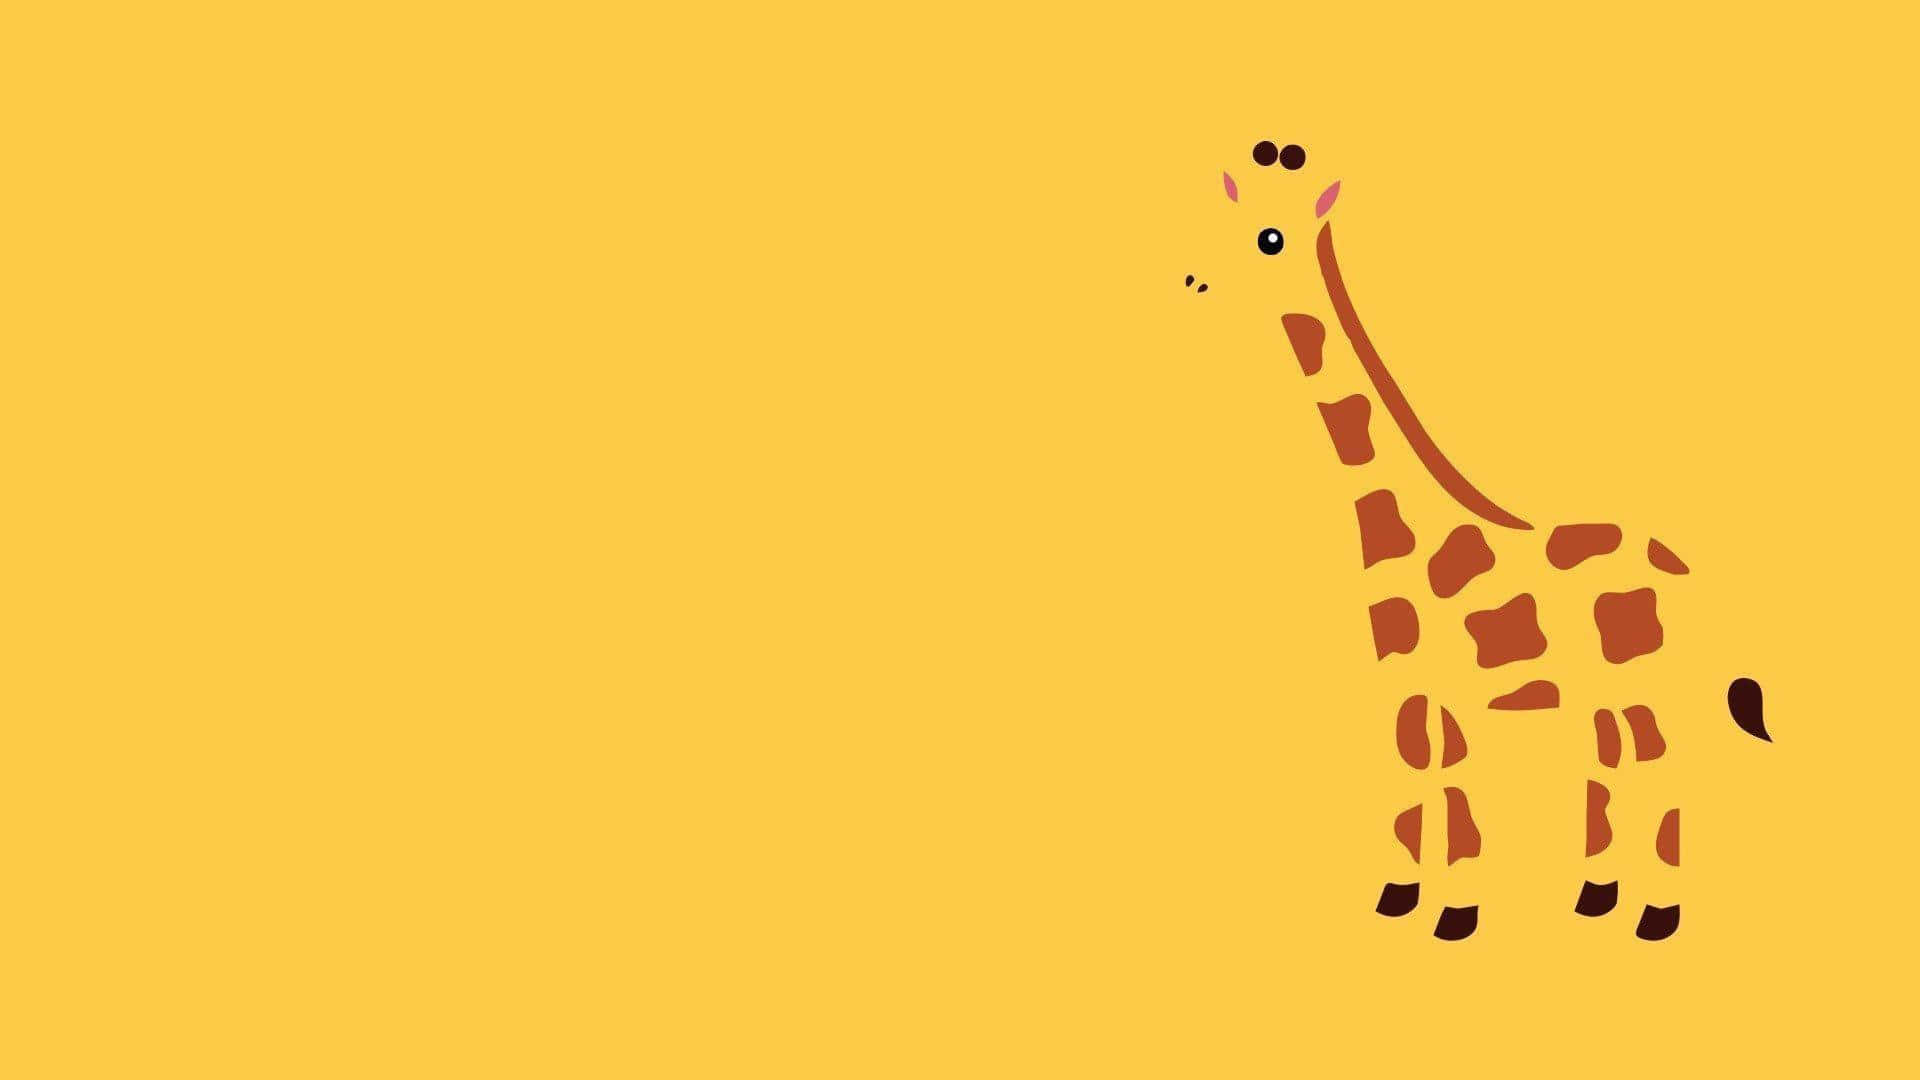 Adorable Kawaii Giraffe with a cheerful expression Wallpaper